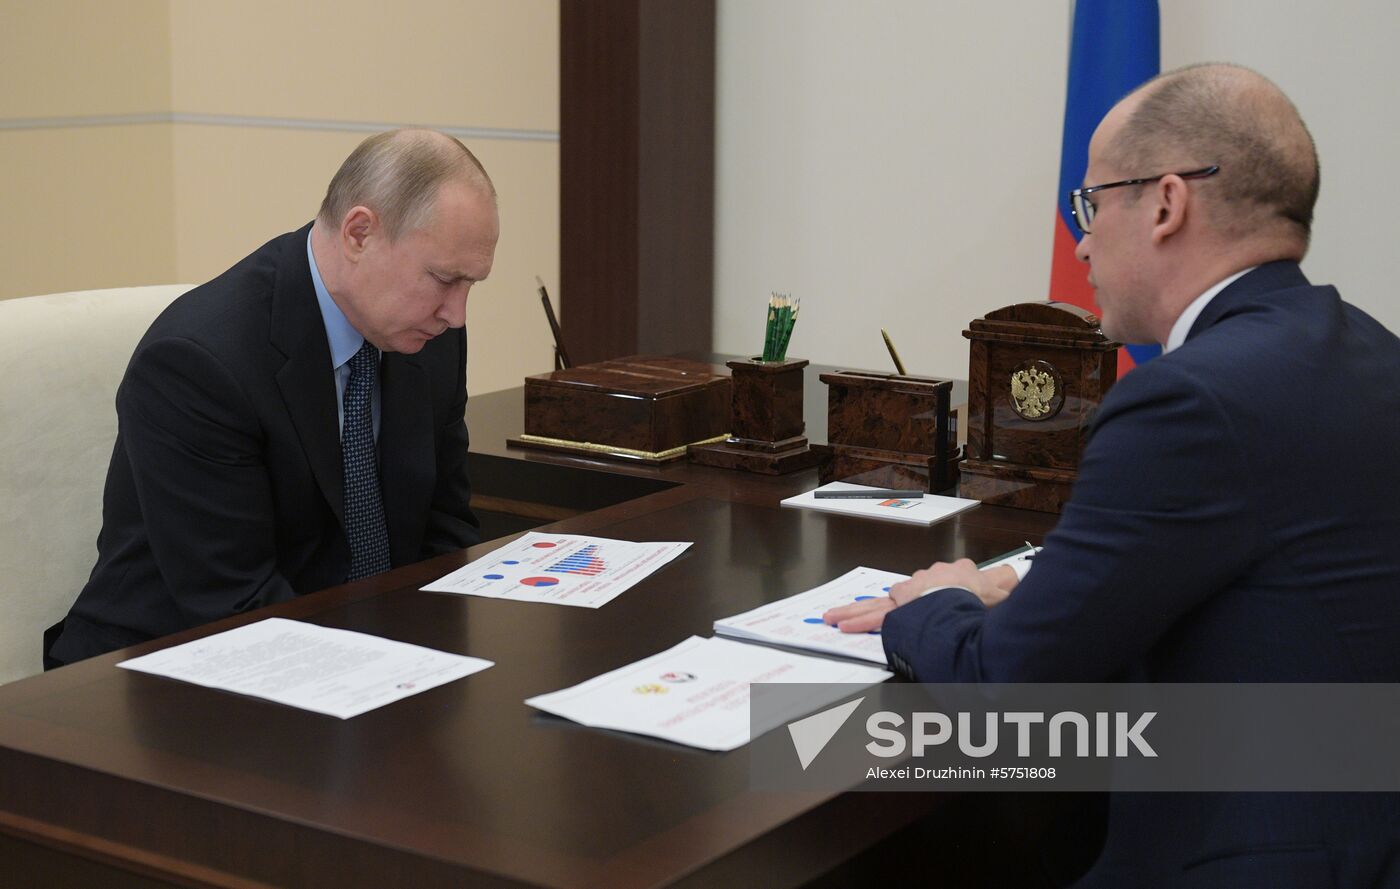 President Vladimir Putin meets with Head of Udmurtia Alexander Brechalov